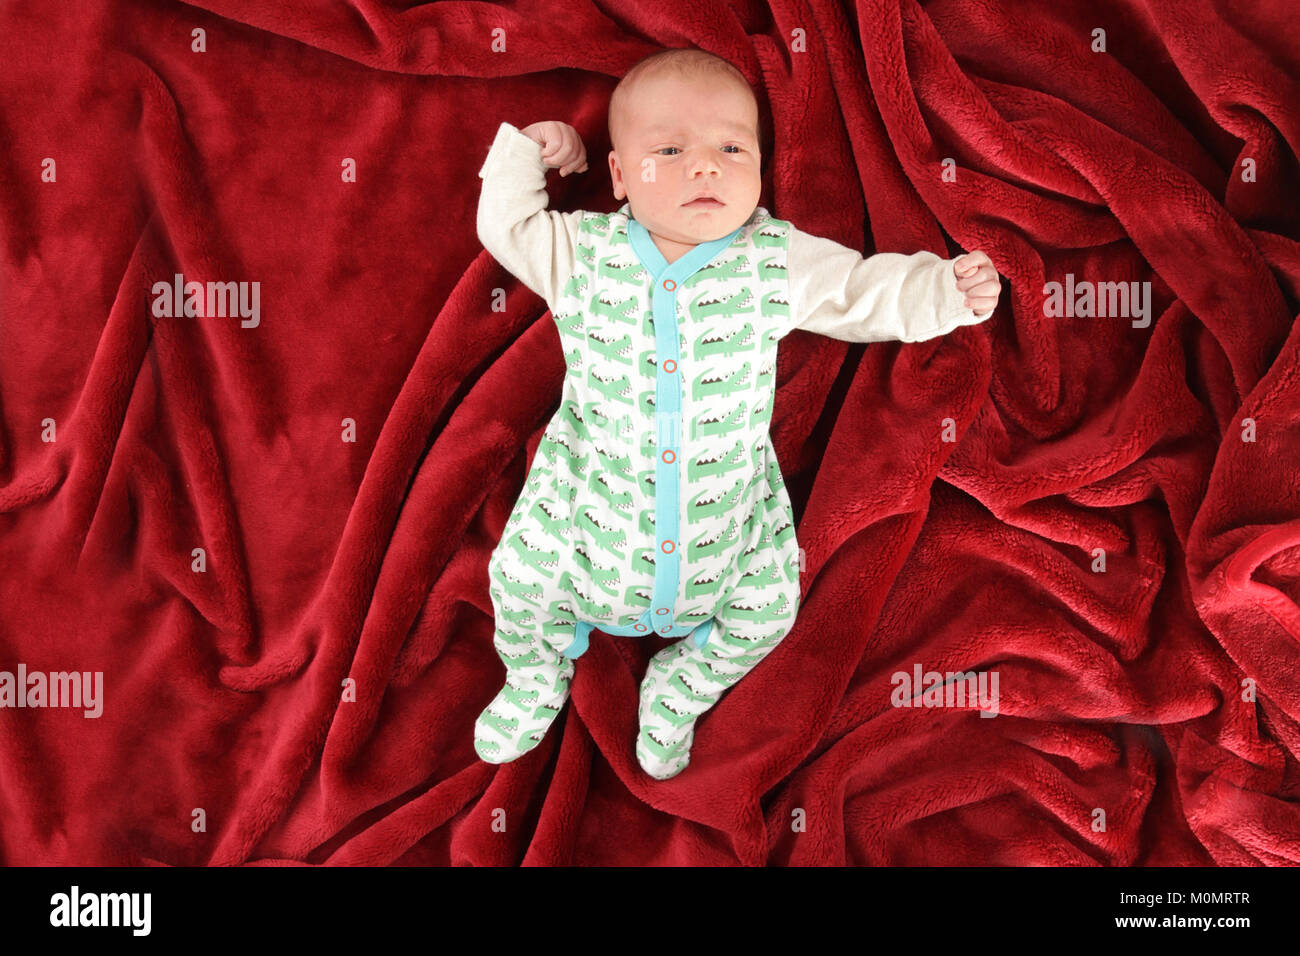 2 week old baby boy, newborn baby, infant Stock Photo